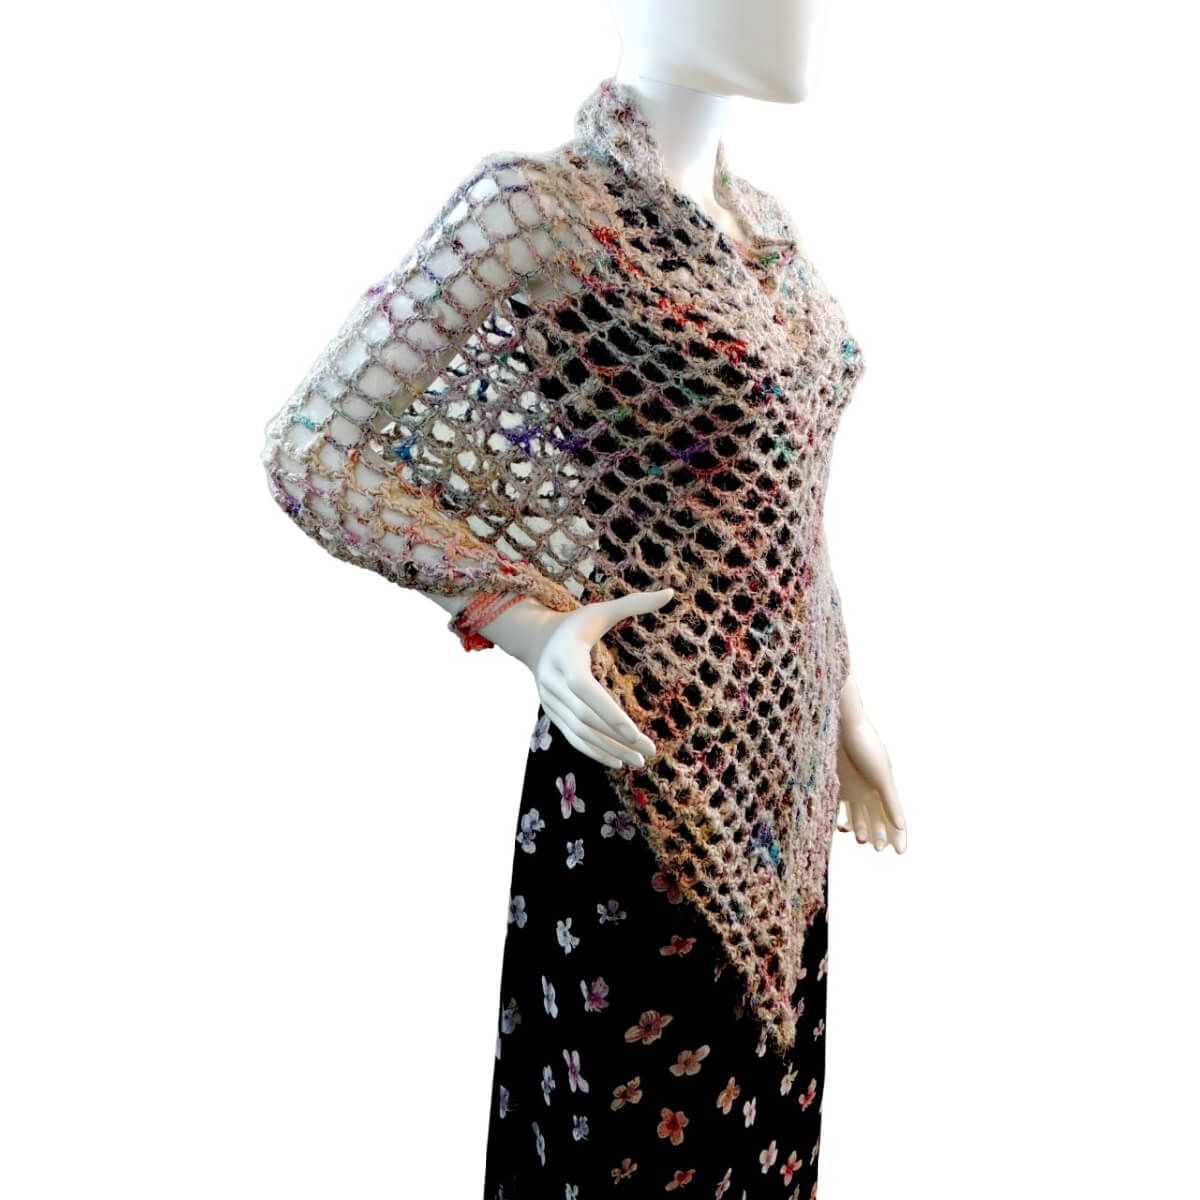 Poncho-Style Summer Crochet Top - Free Pattern » Make & Do Crew